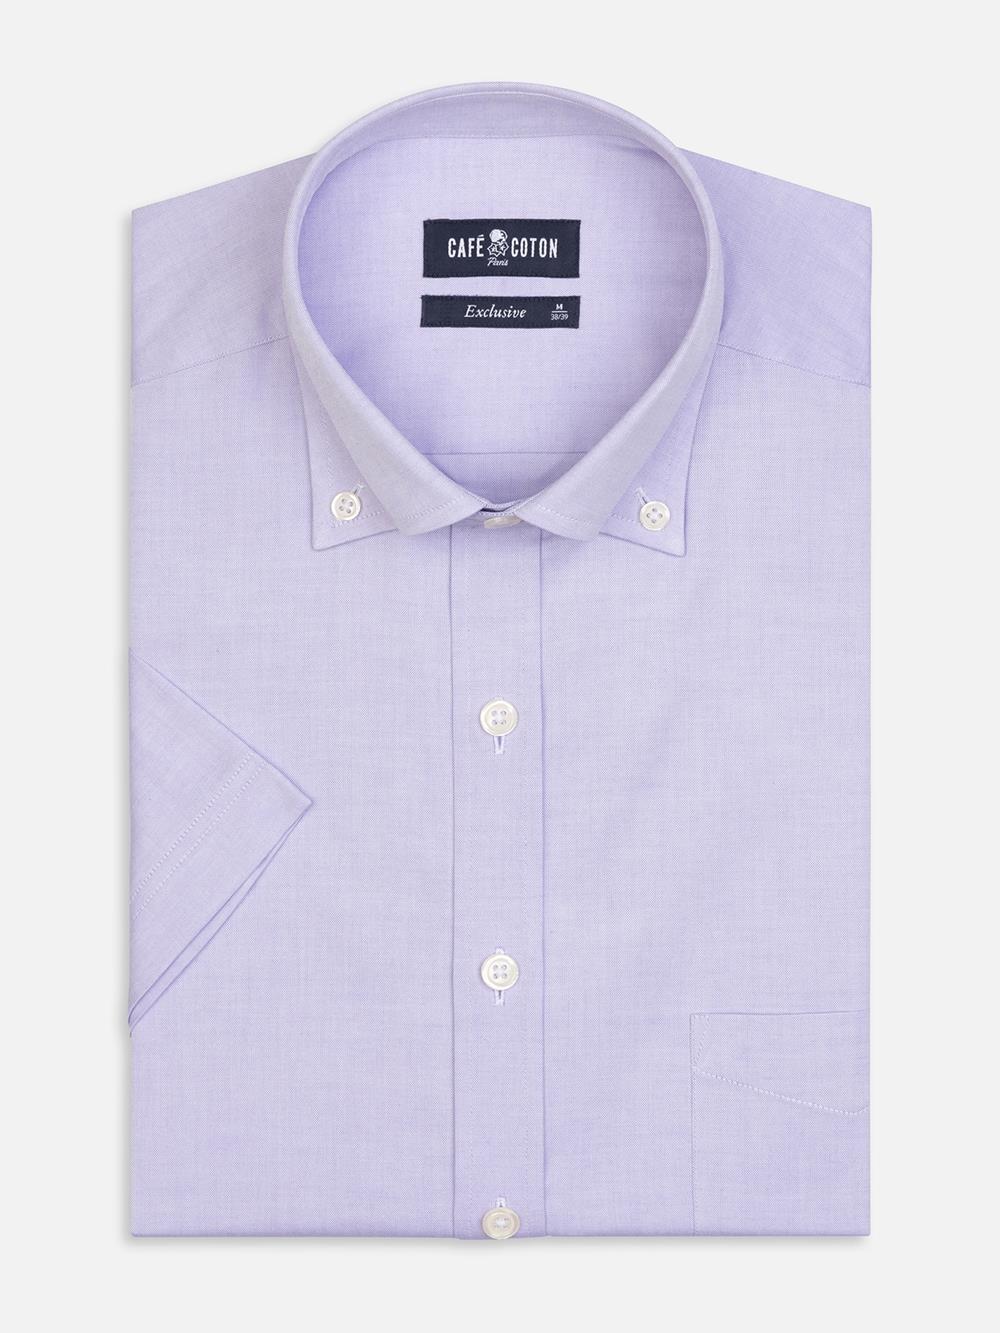 Parma Pin Point short sleeves shirt - Button down collar